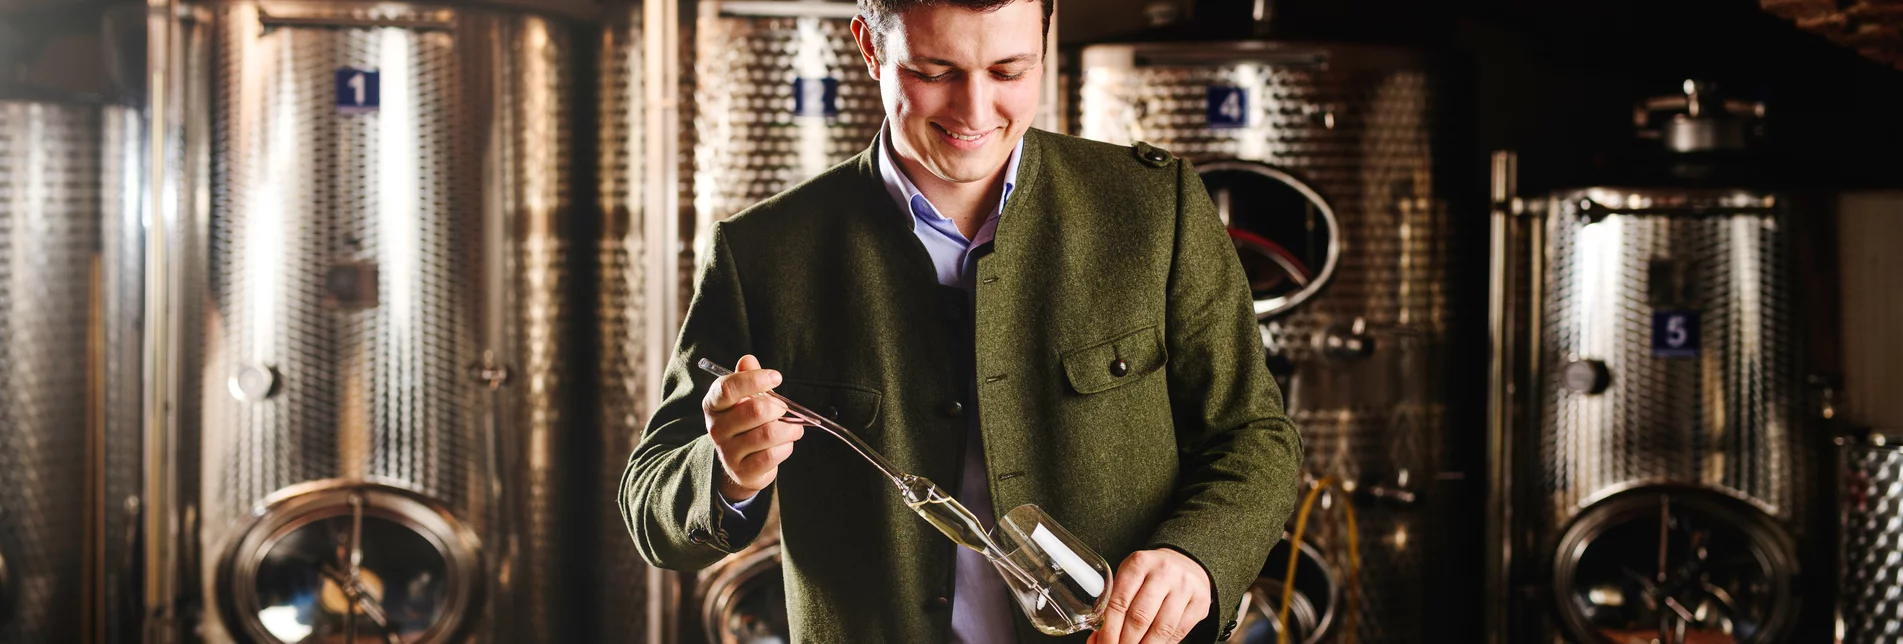 Winzer Franz Menhart beim Weinverkosten | © Südsteiermark | Michael Königshofer